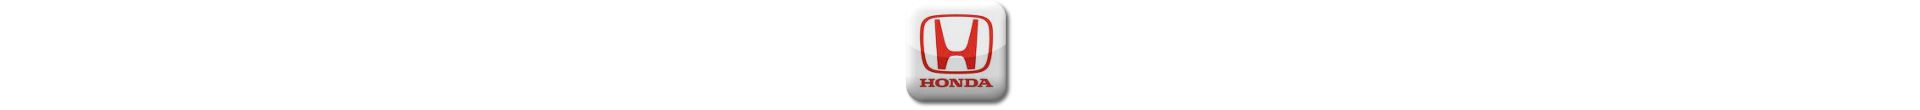 Boitier additionnel Honda Essence Evolussem